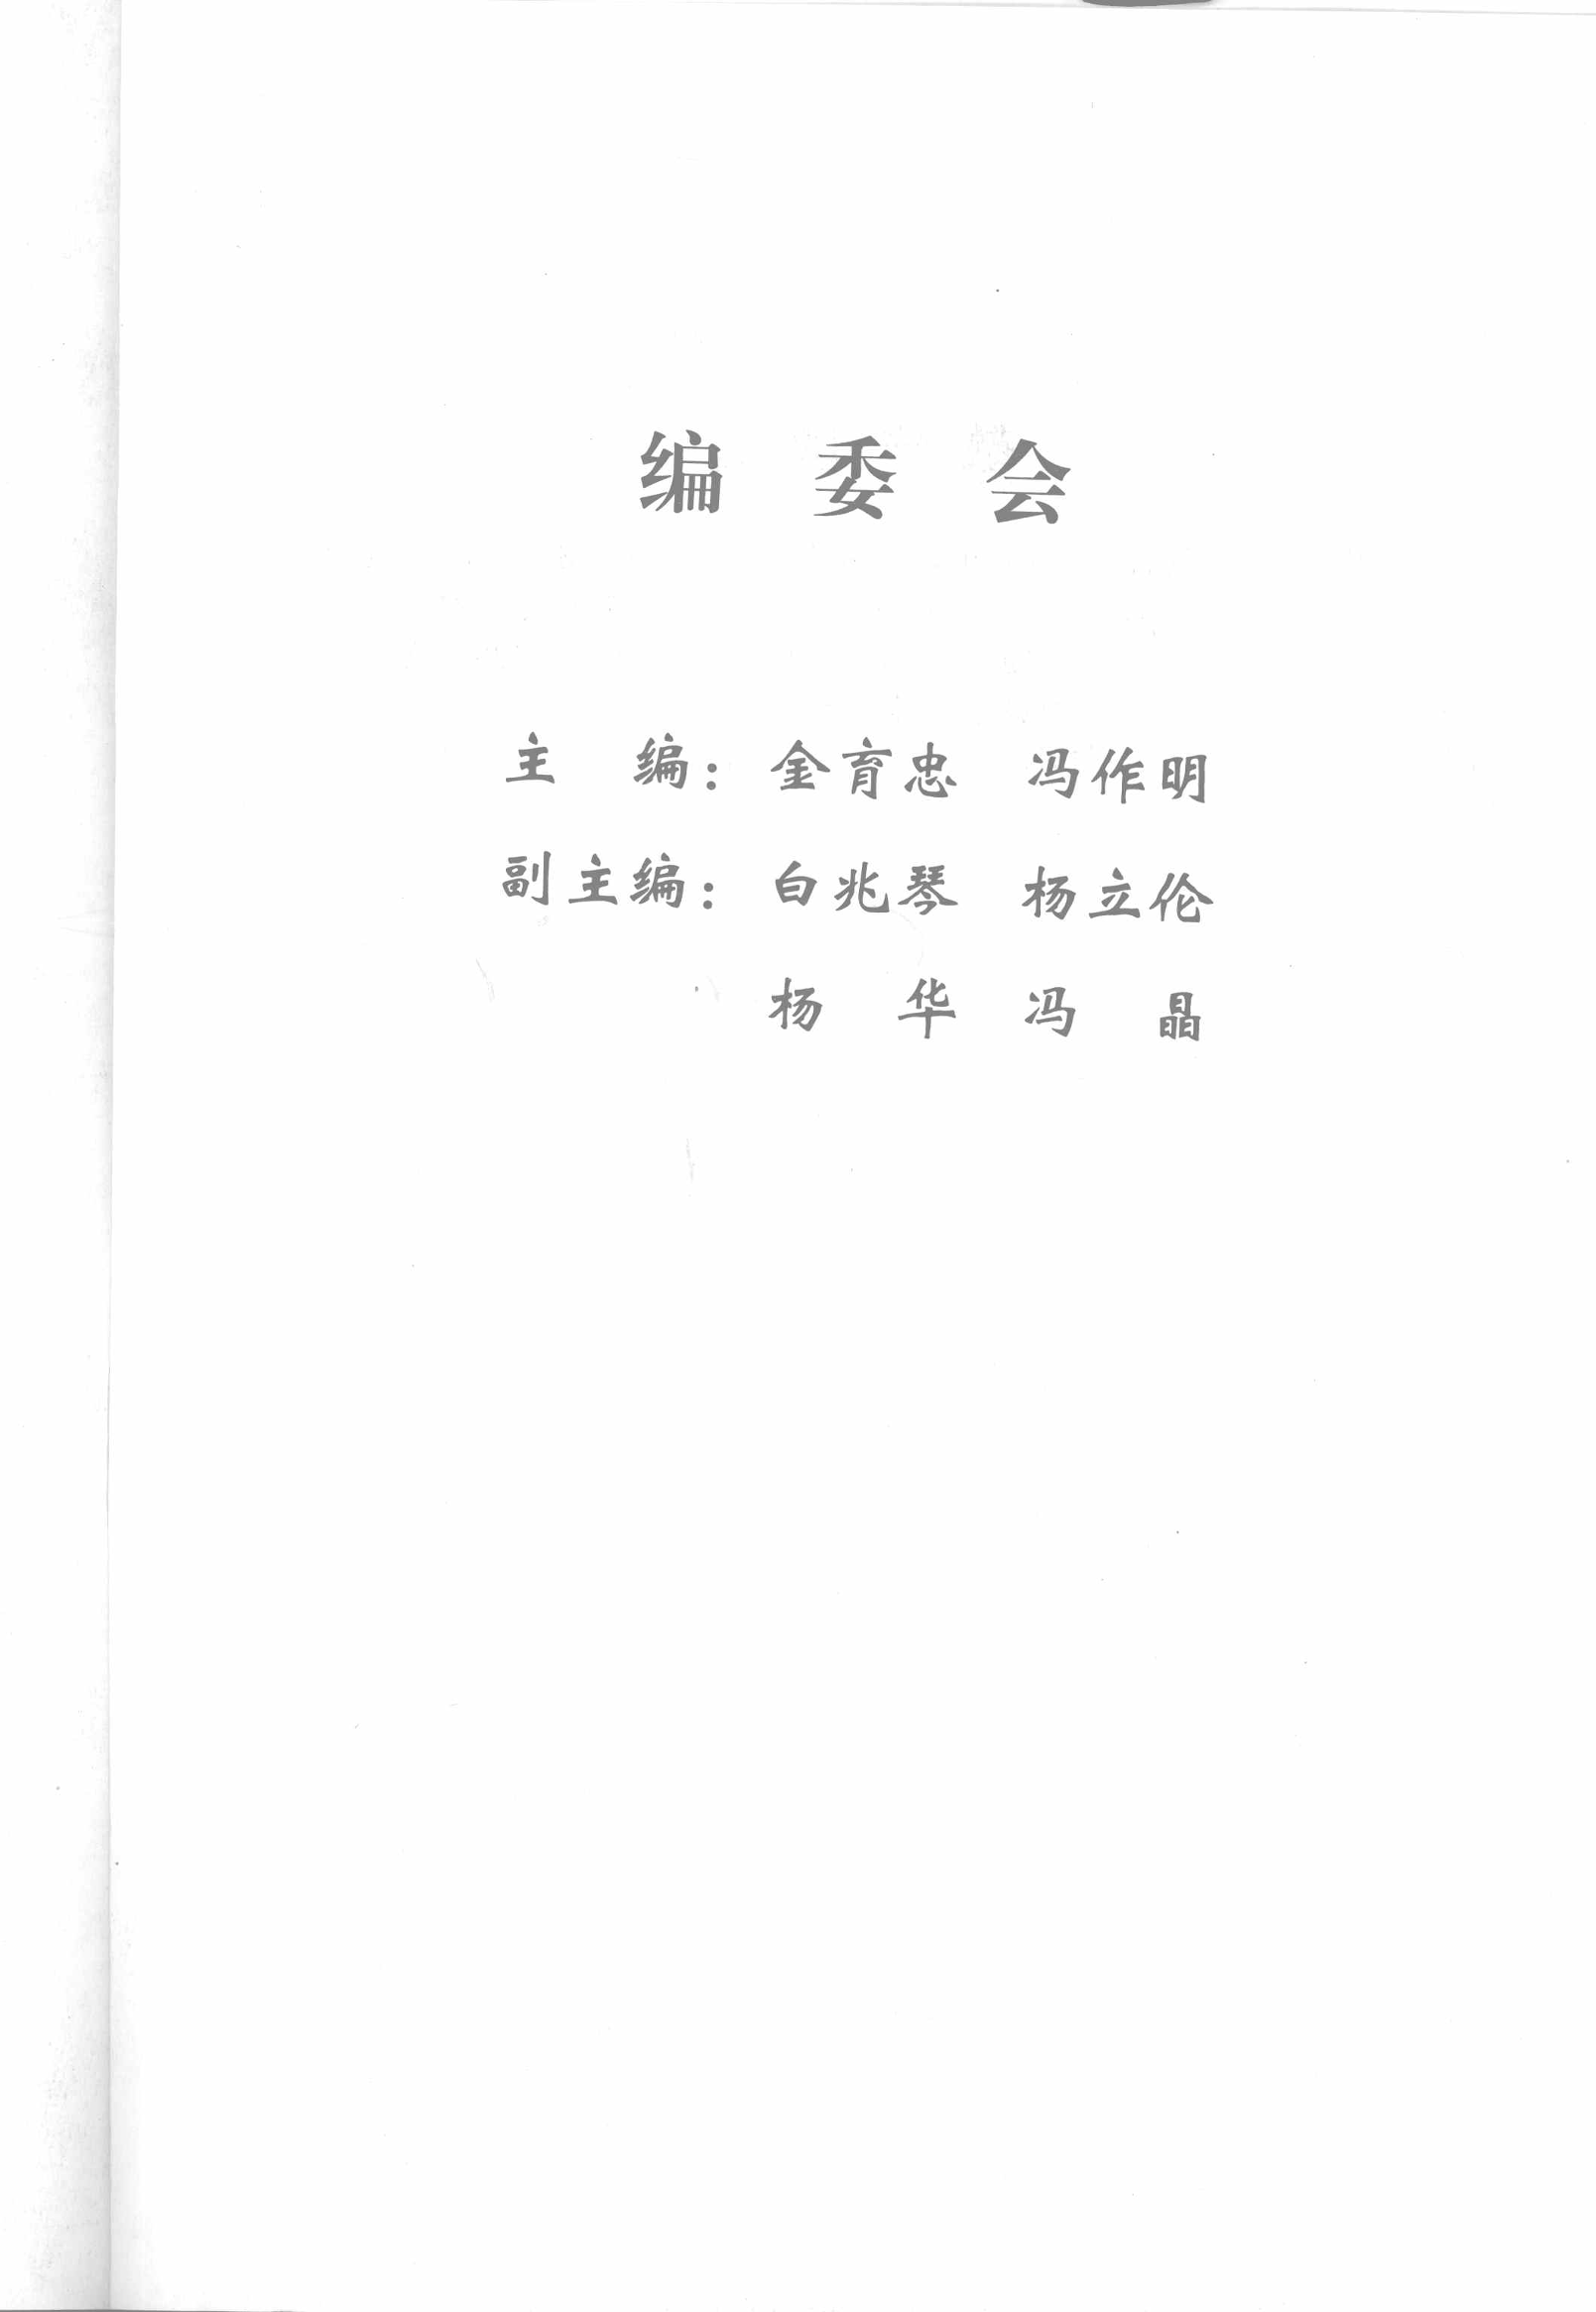 angsl-新编抗肿瘤药临床应用手册_12067396.pdf